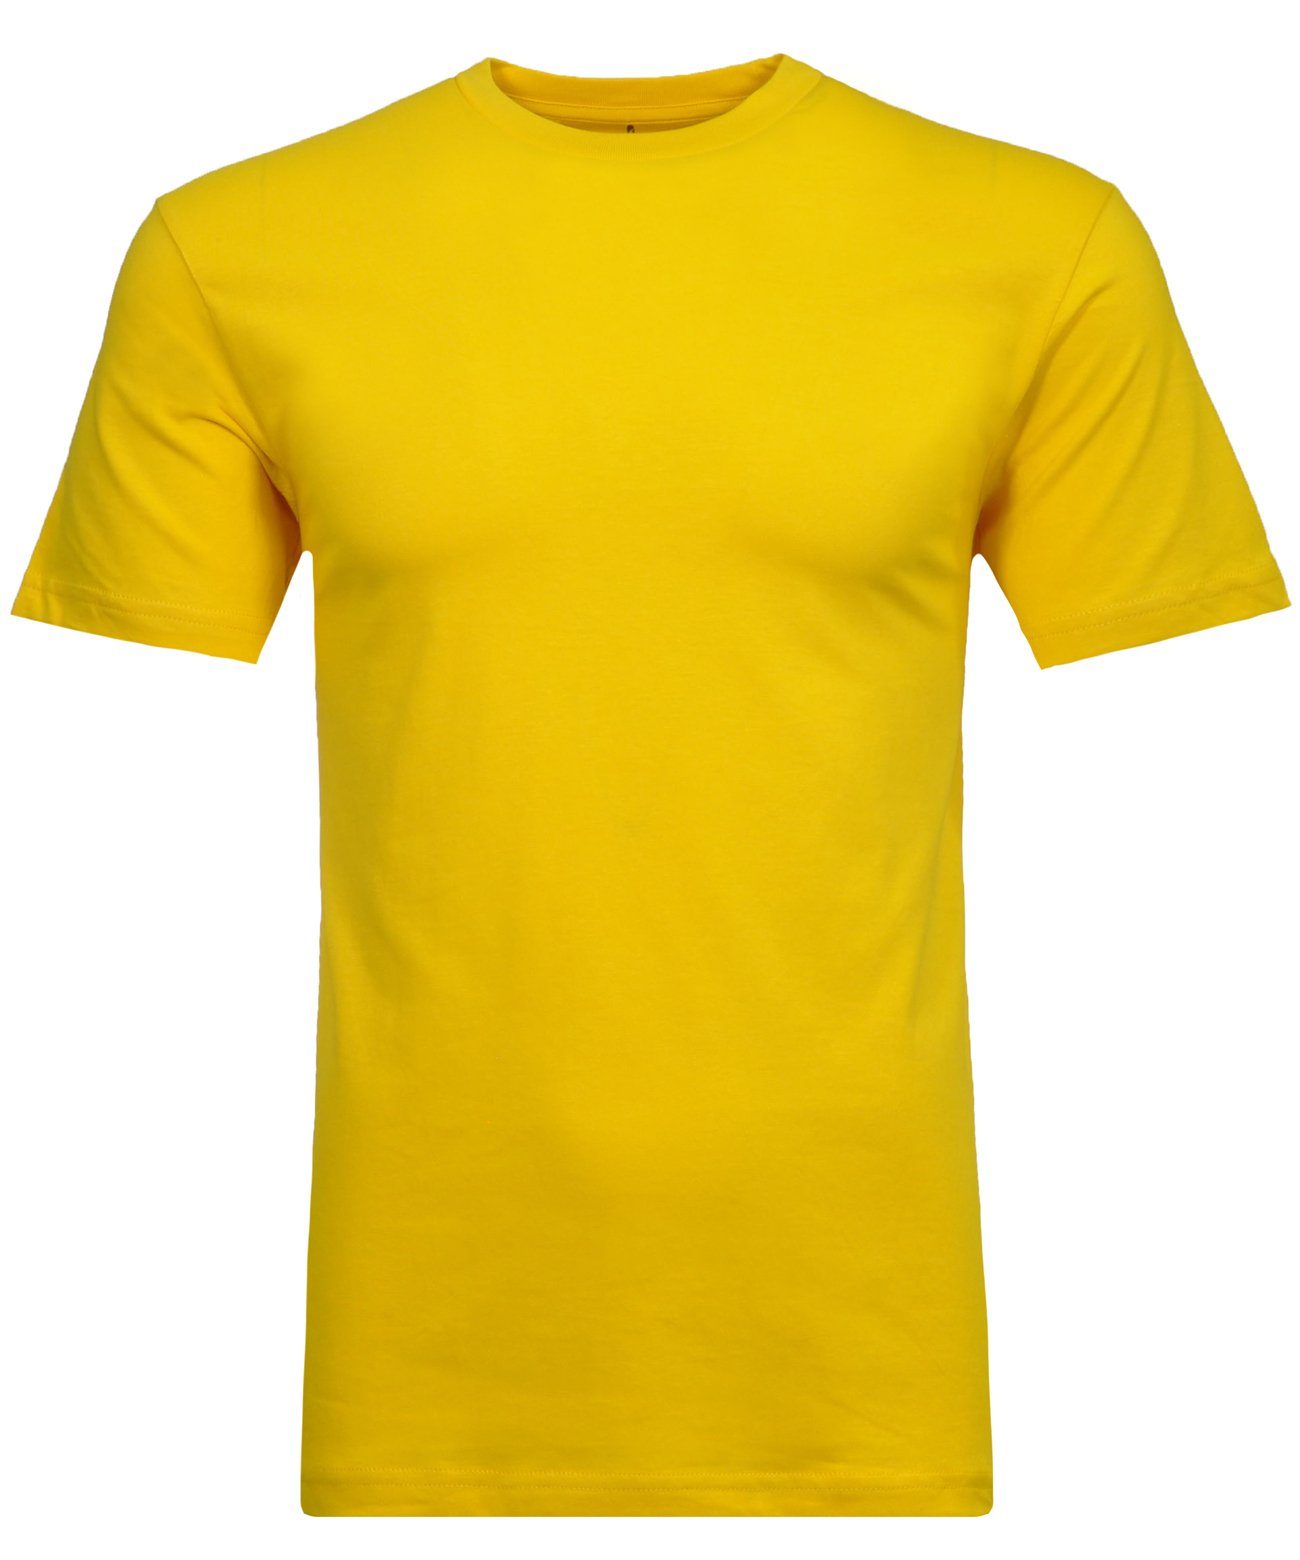 RAGMAN Longshirt Gelb | T-Shirts